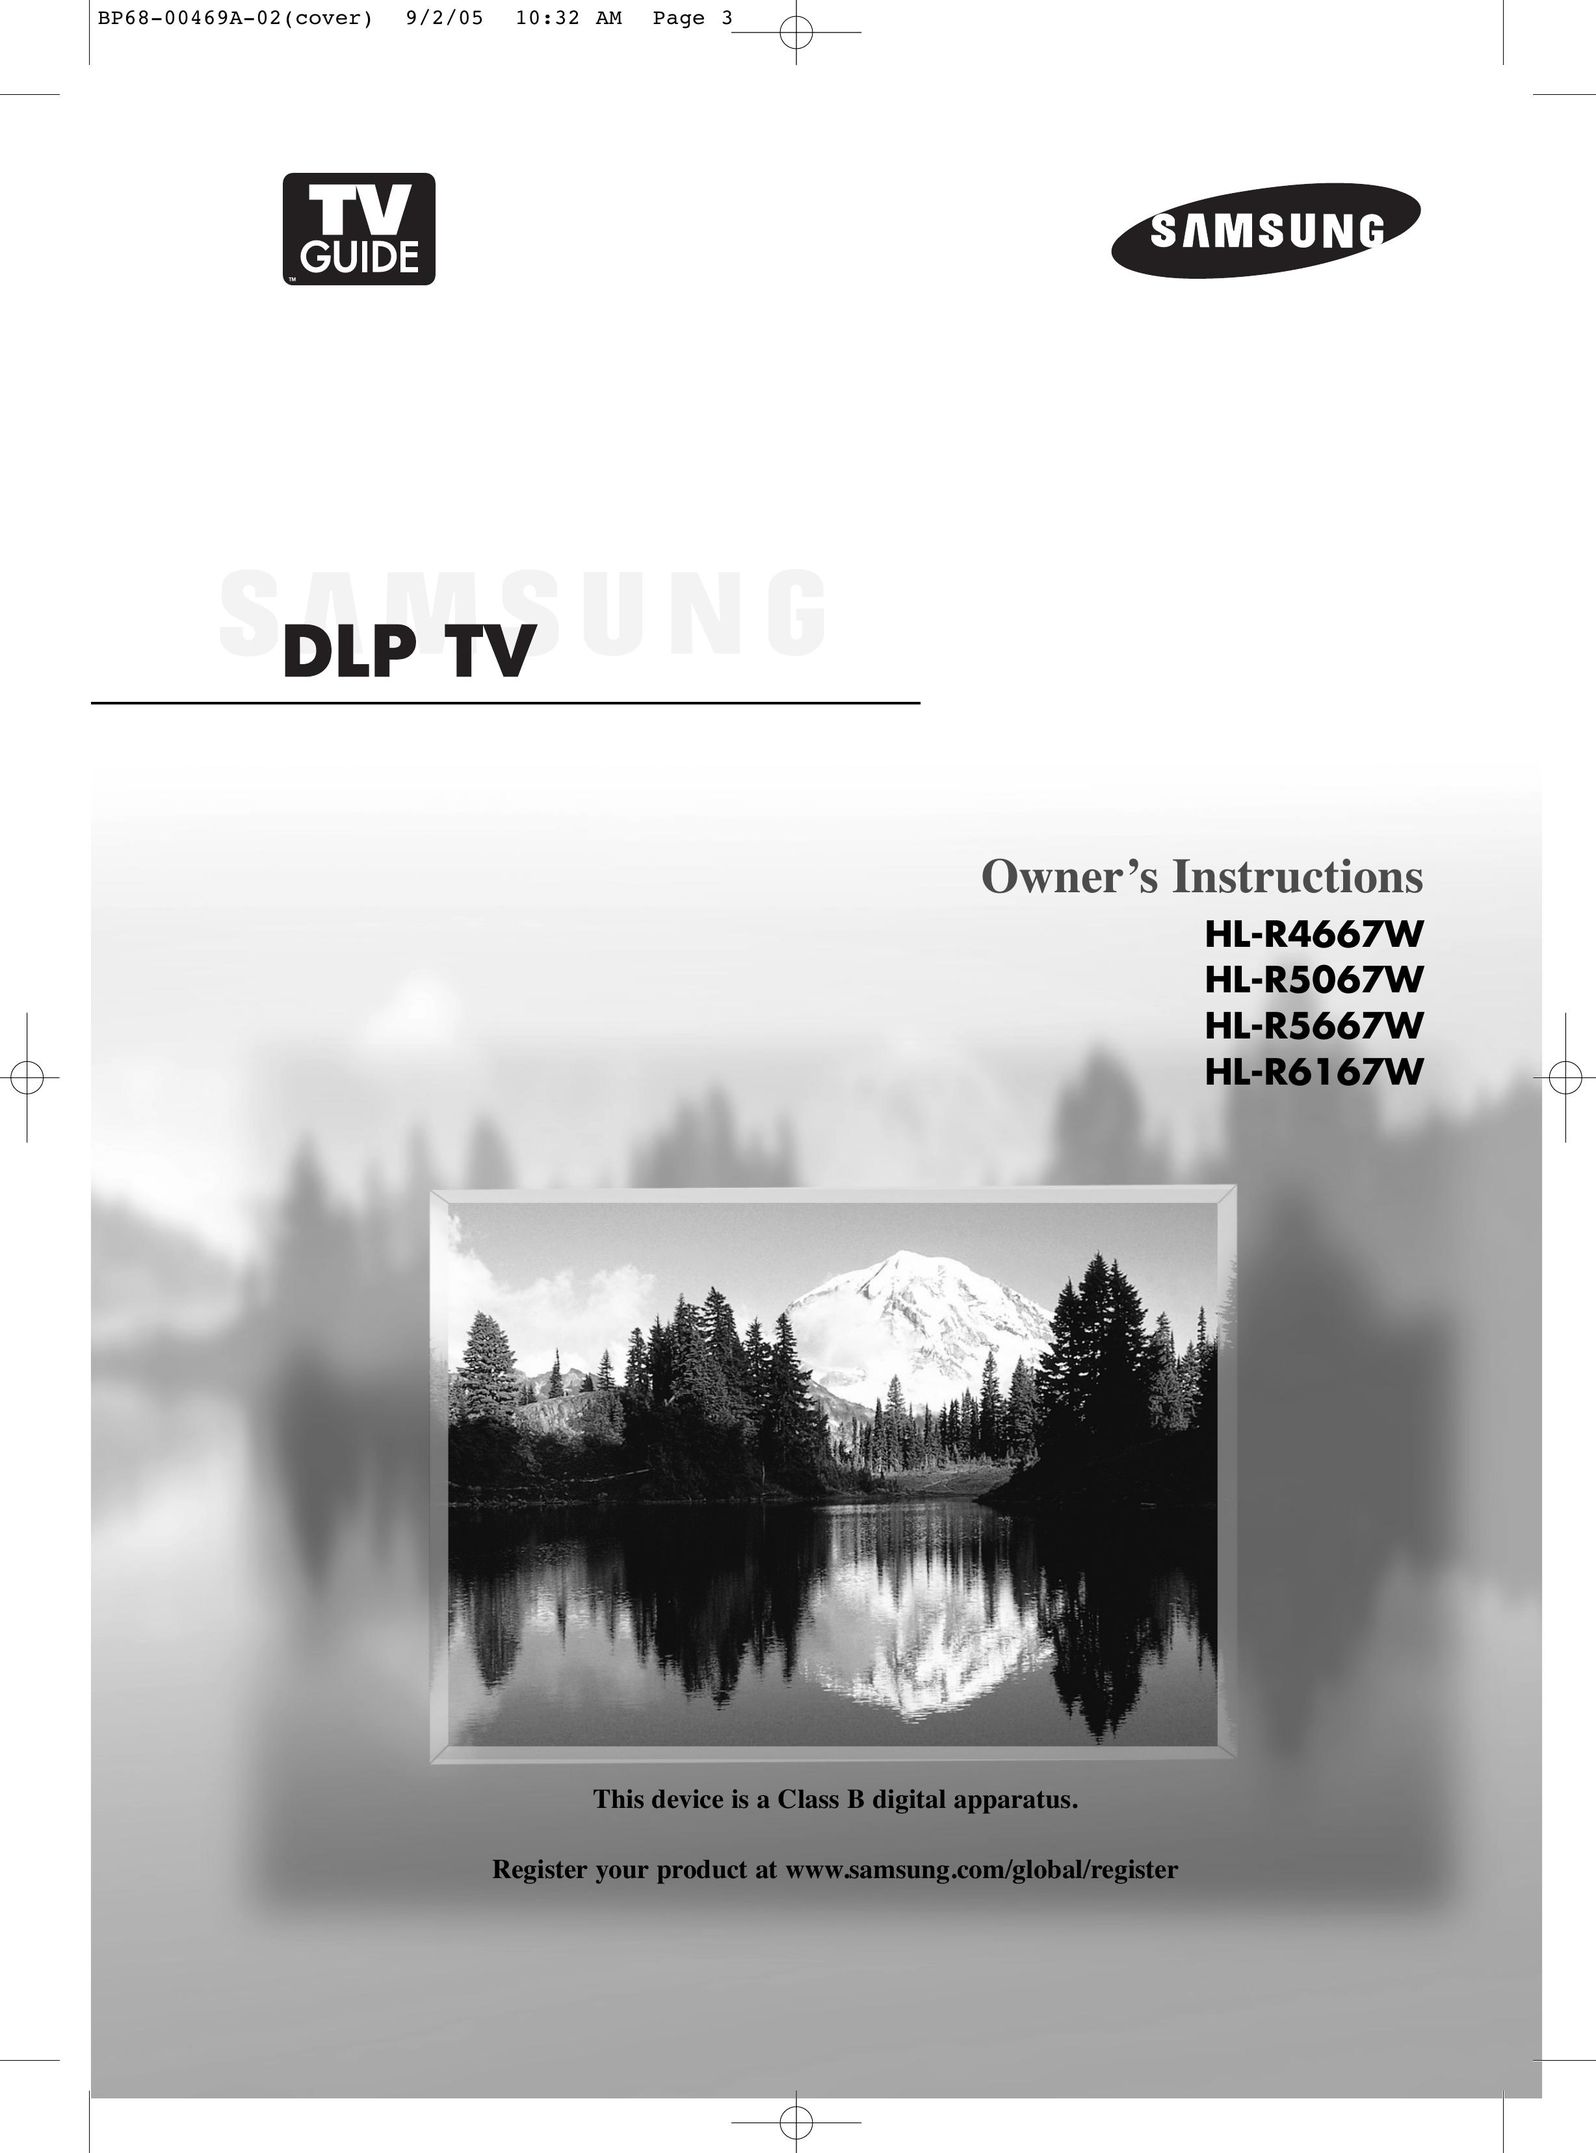 Samsung HL-R6167W TV Receiver User Manual